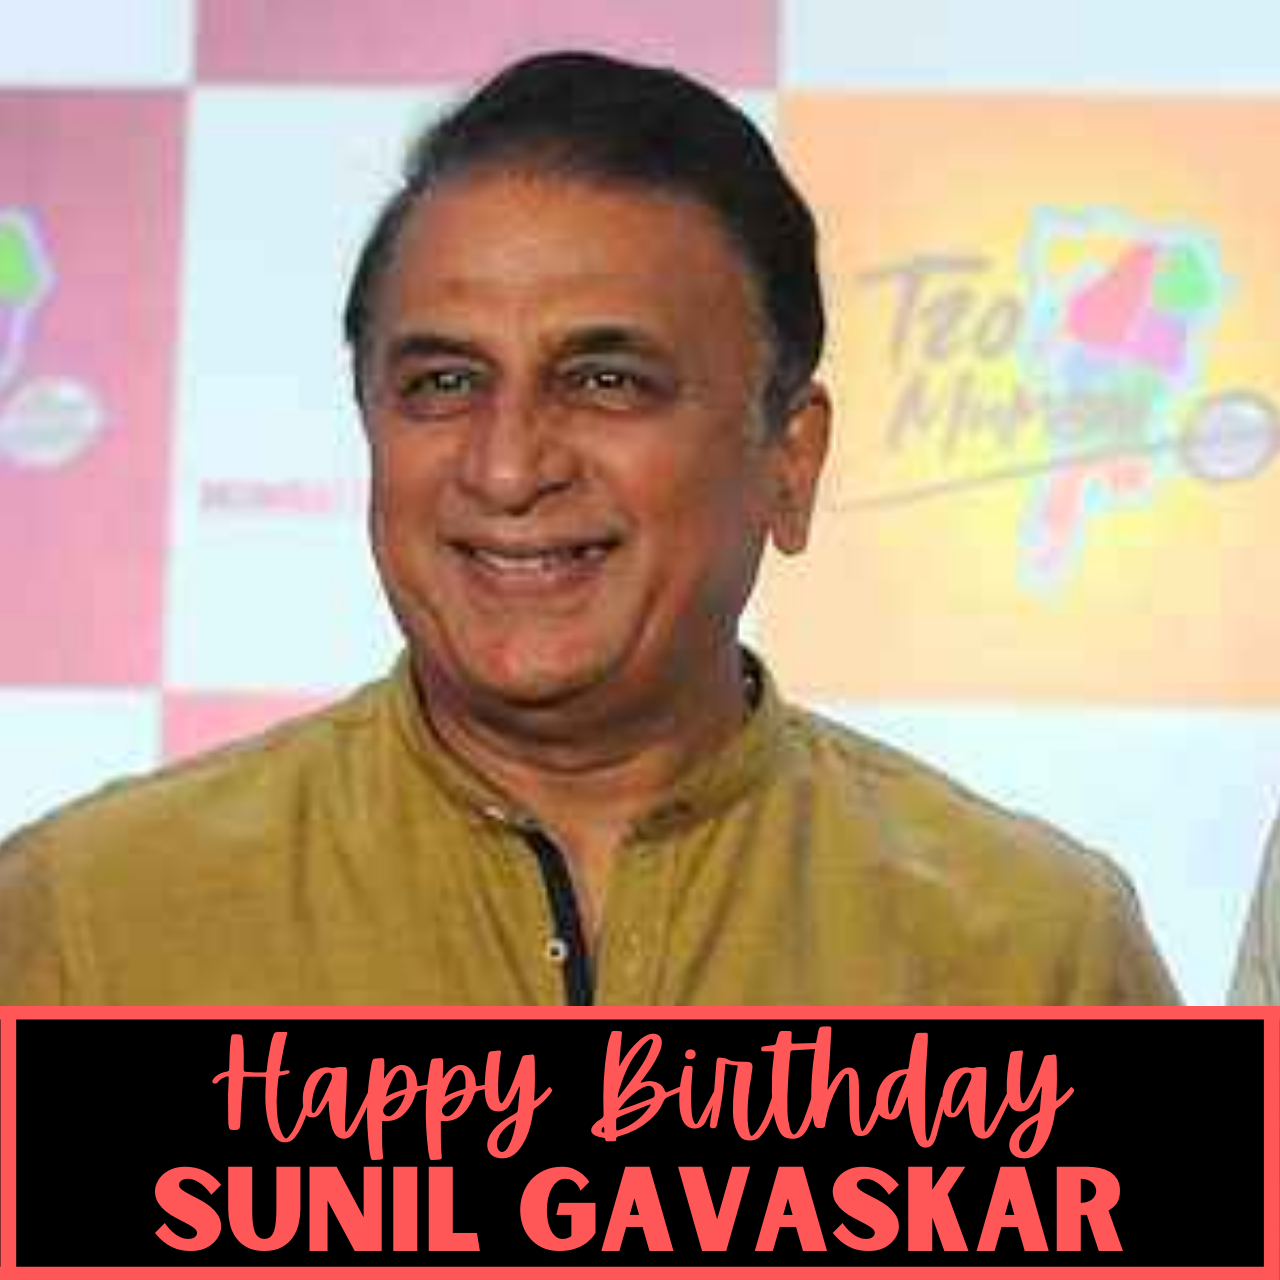 Happy Birthday Sunil Gavaskar: Wishes, Images (photo), and WhatsApp Status Video to greet 'Little Master'